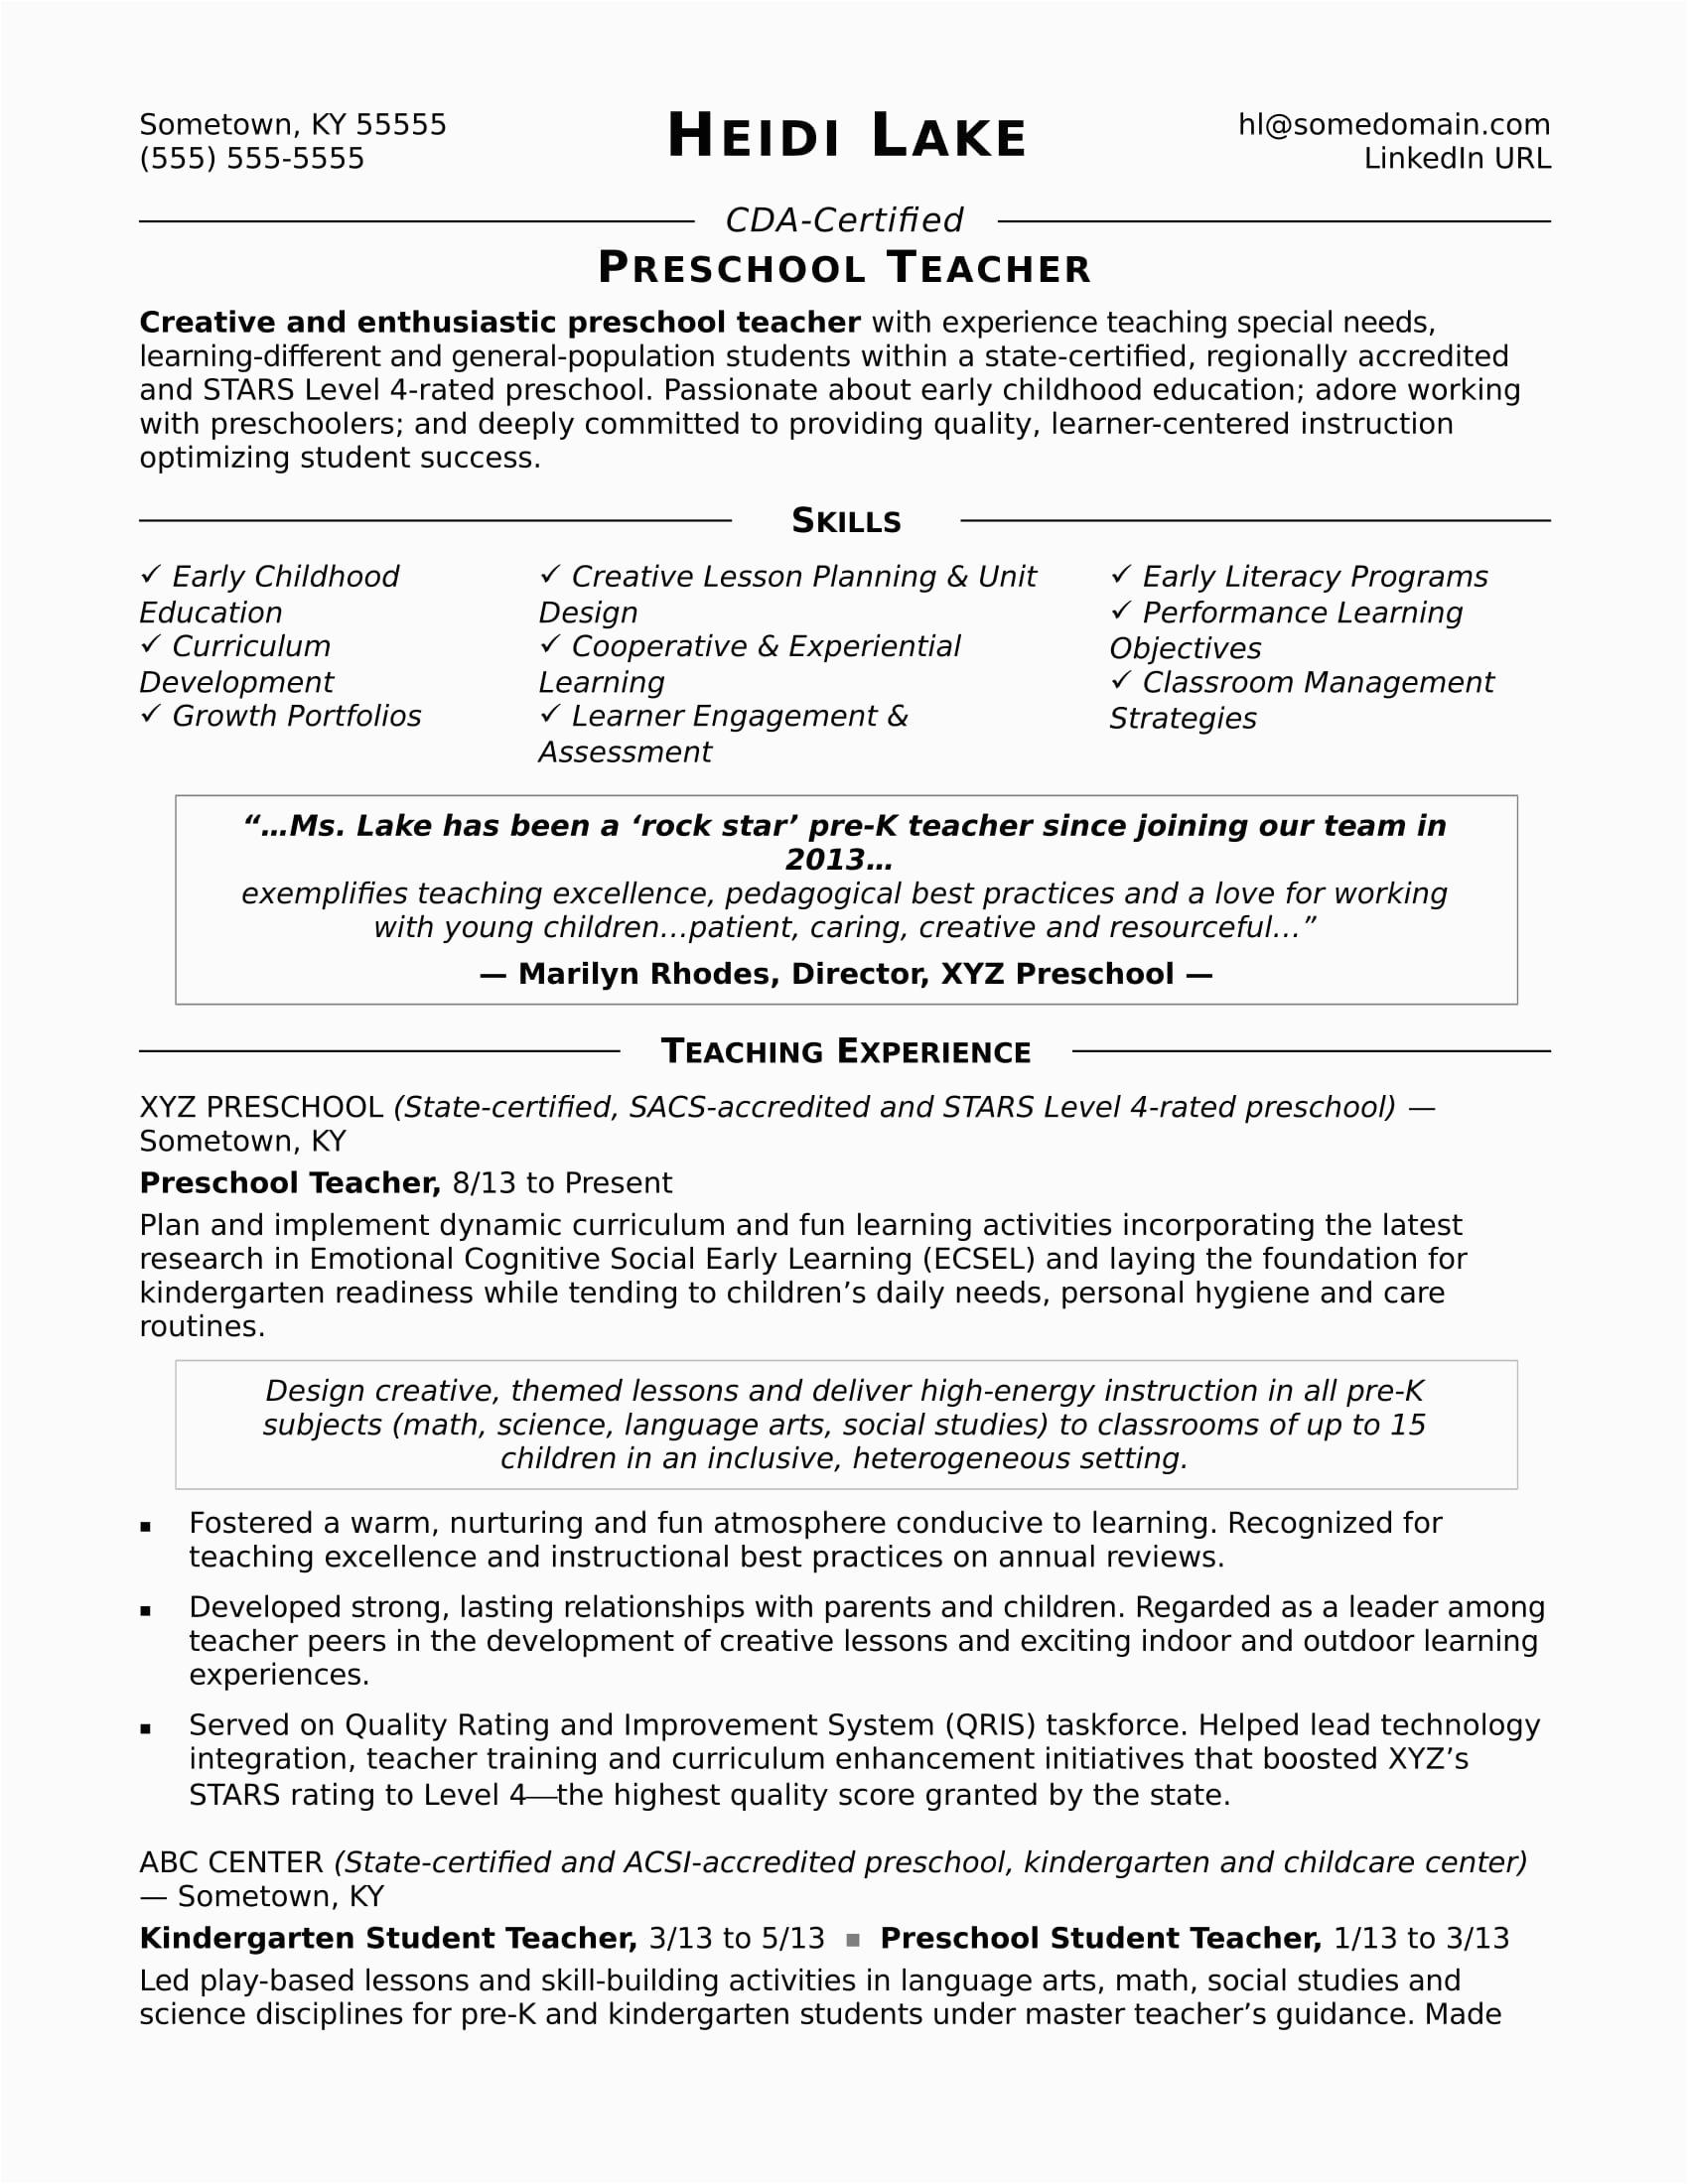 Sample Resume for Nursery School Teacher Preschool Teacher Resume Sample